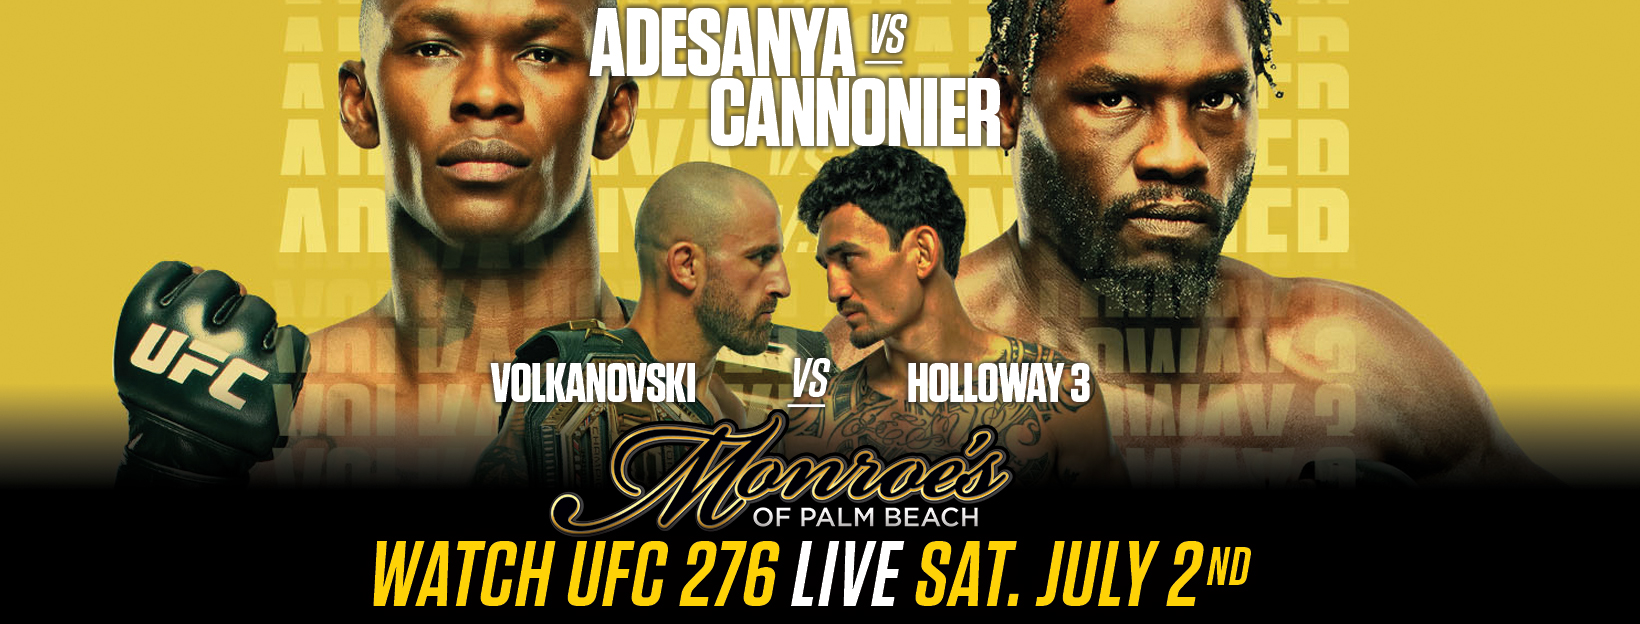 UFC 276 LIVE at Monroe's Palm Beach Sat July 2nd